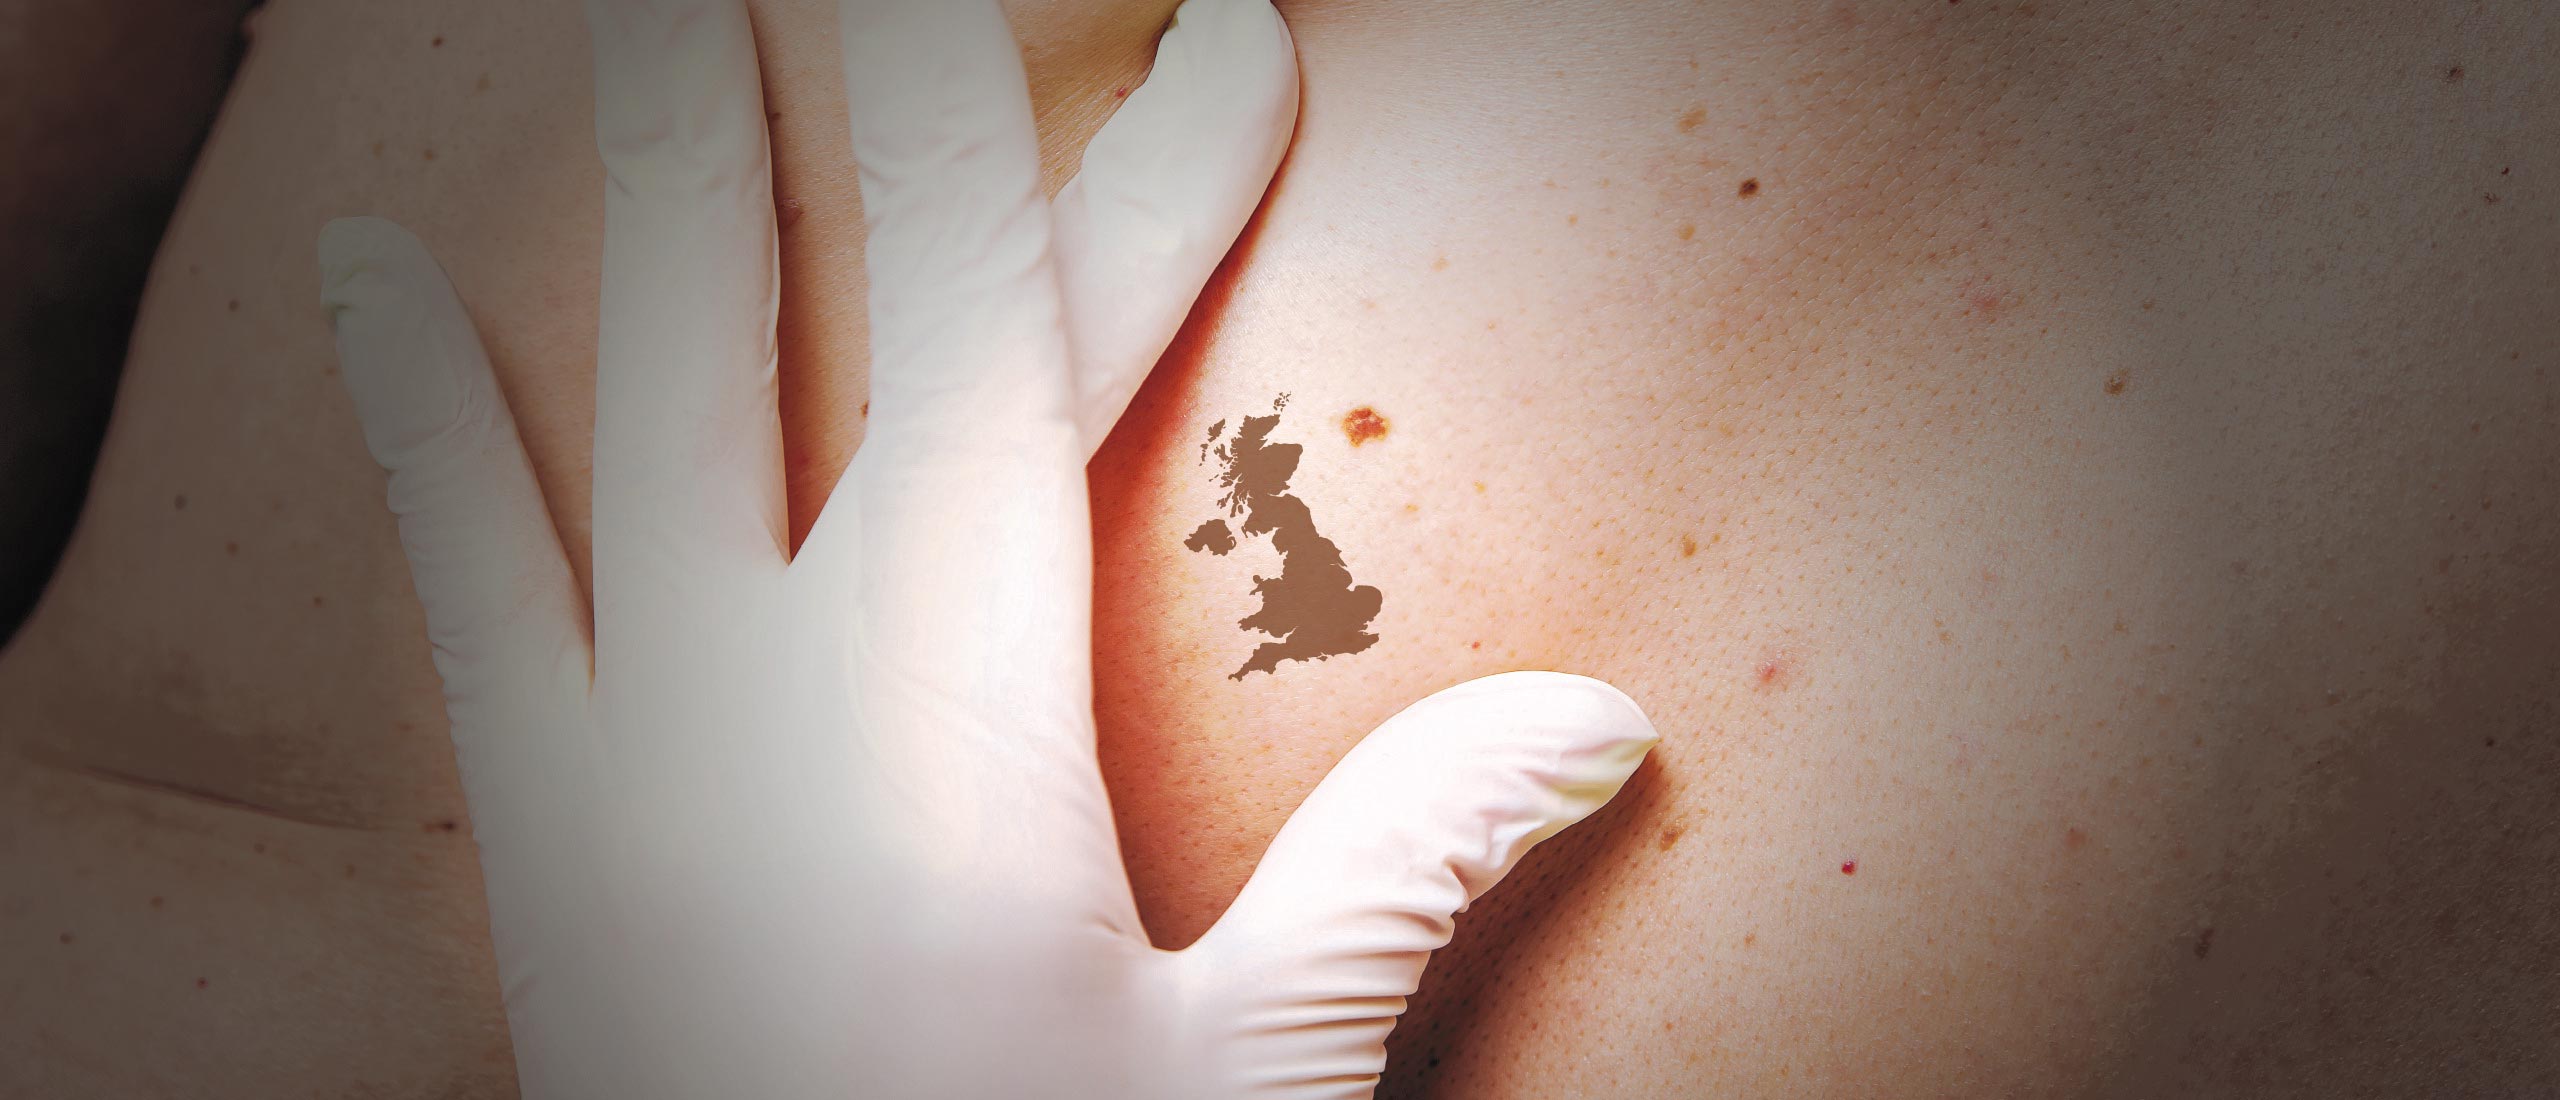 Mole shaped like Great Britain